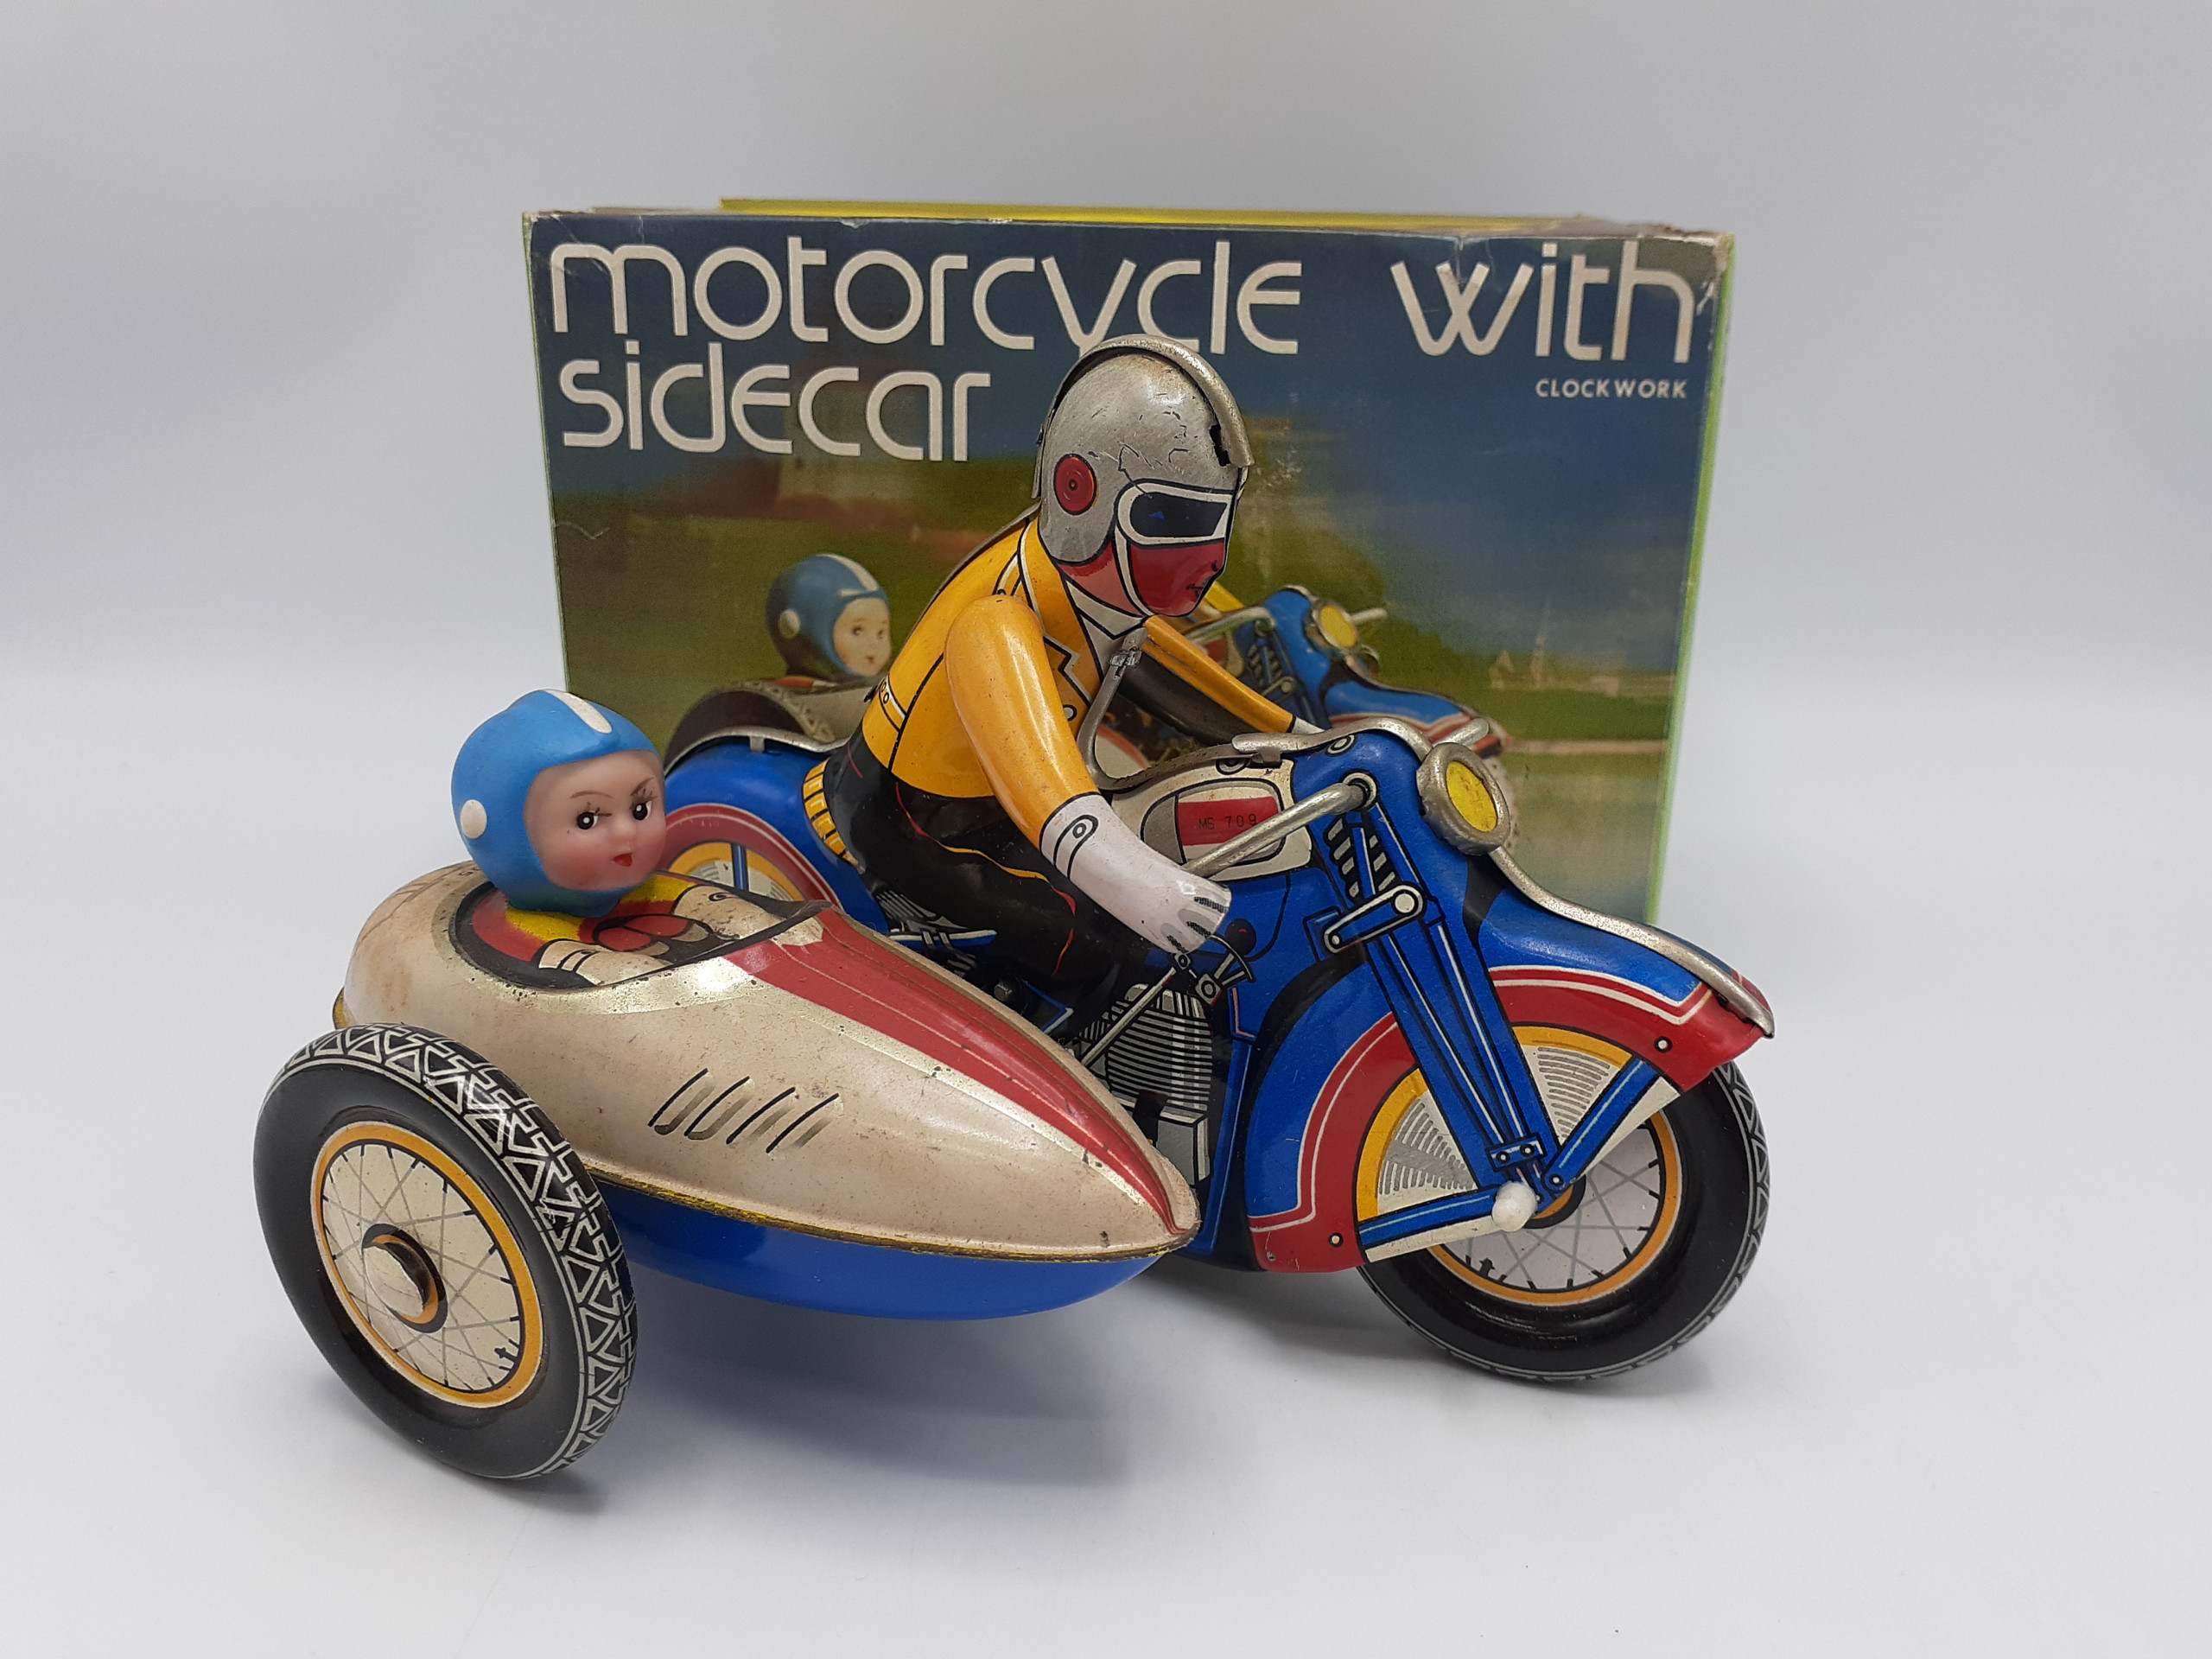 Motorcycle With Sidecar clockwork MS 709 ブリキおもちゃ サイドカー 